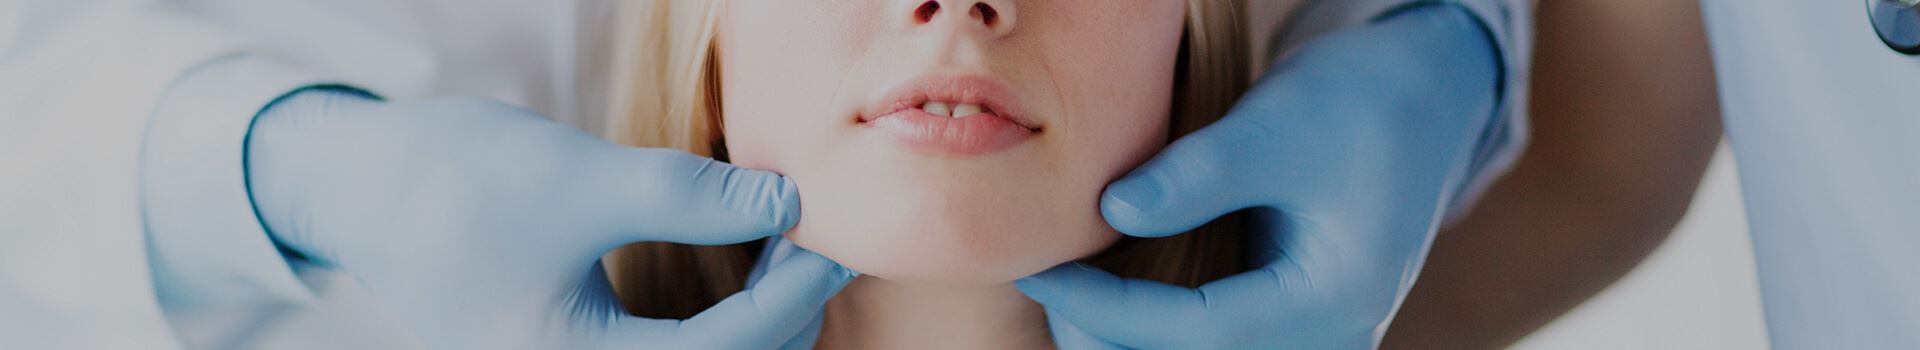 woman receiving cosmetic surgery info